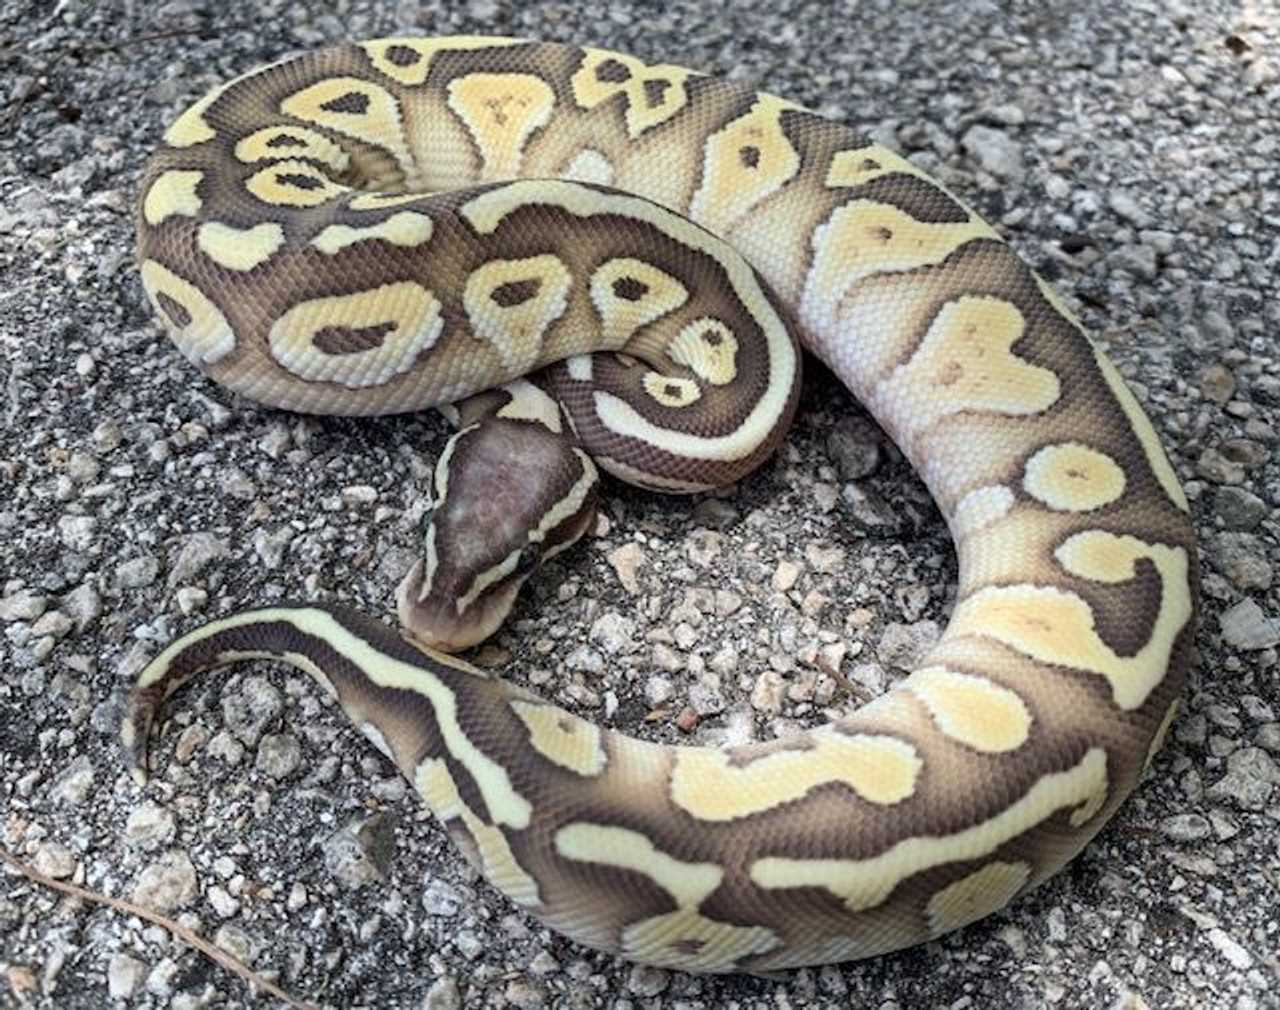 Pastel ghost ball python